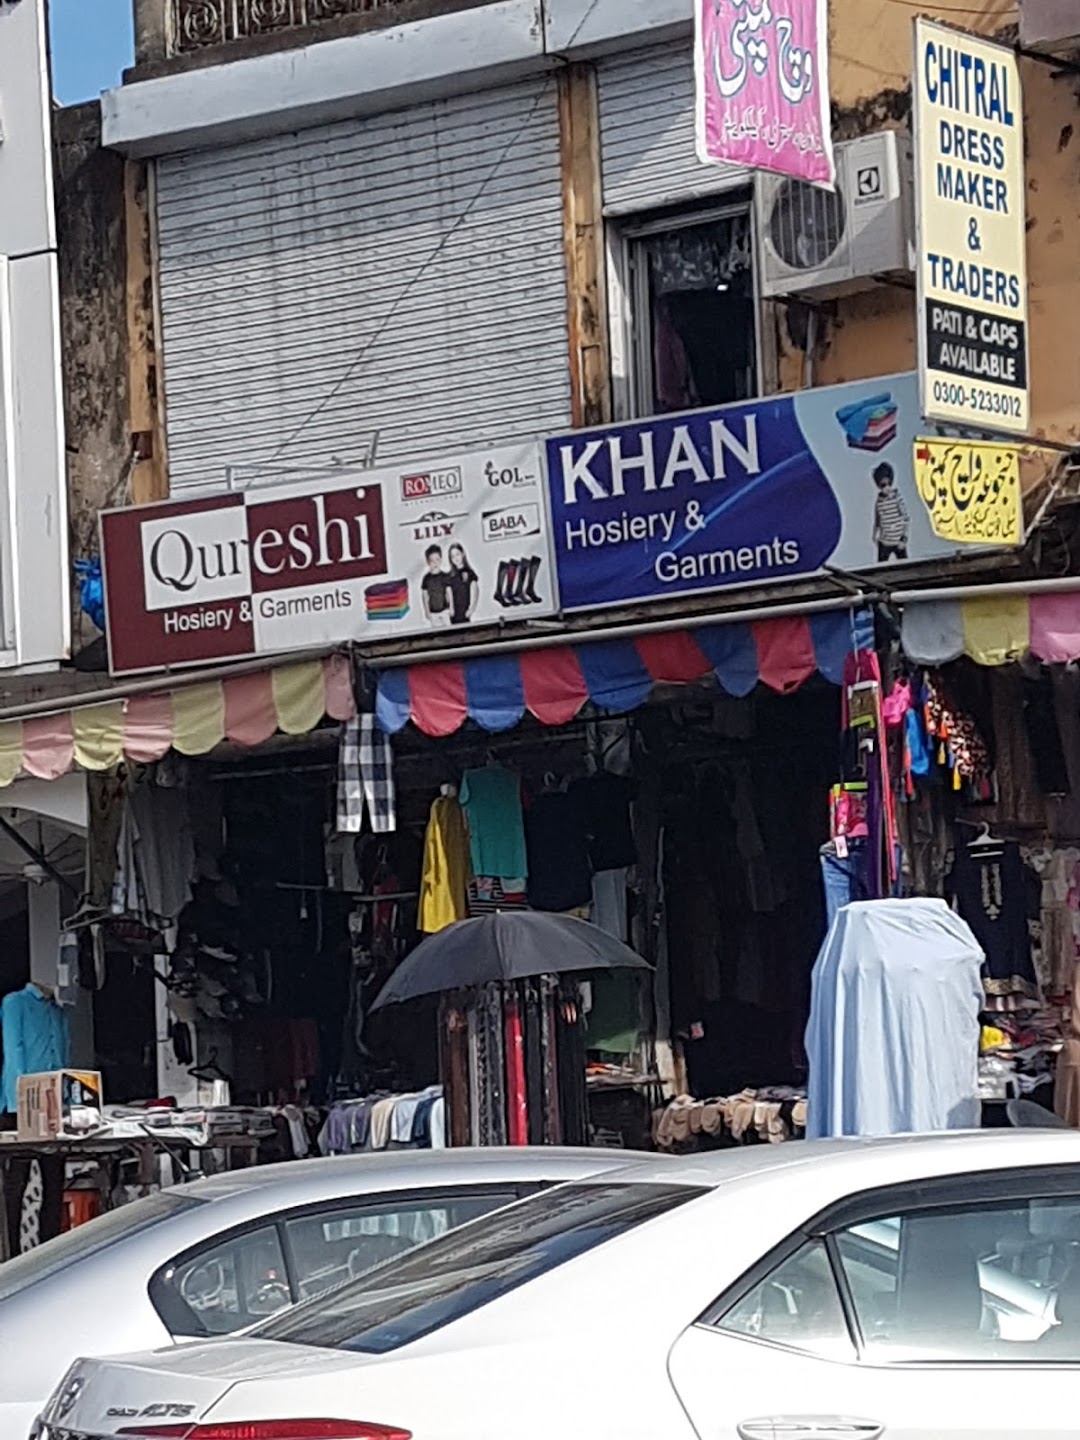 Khan hosiery and garments